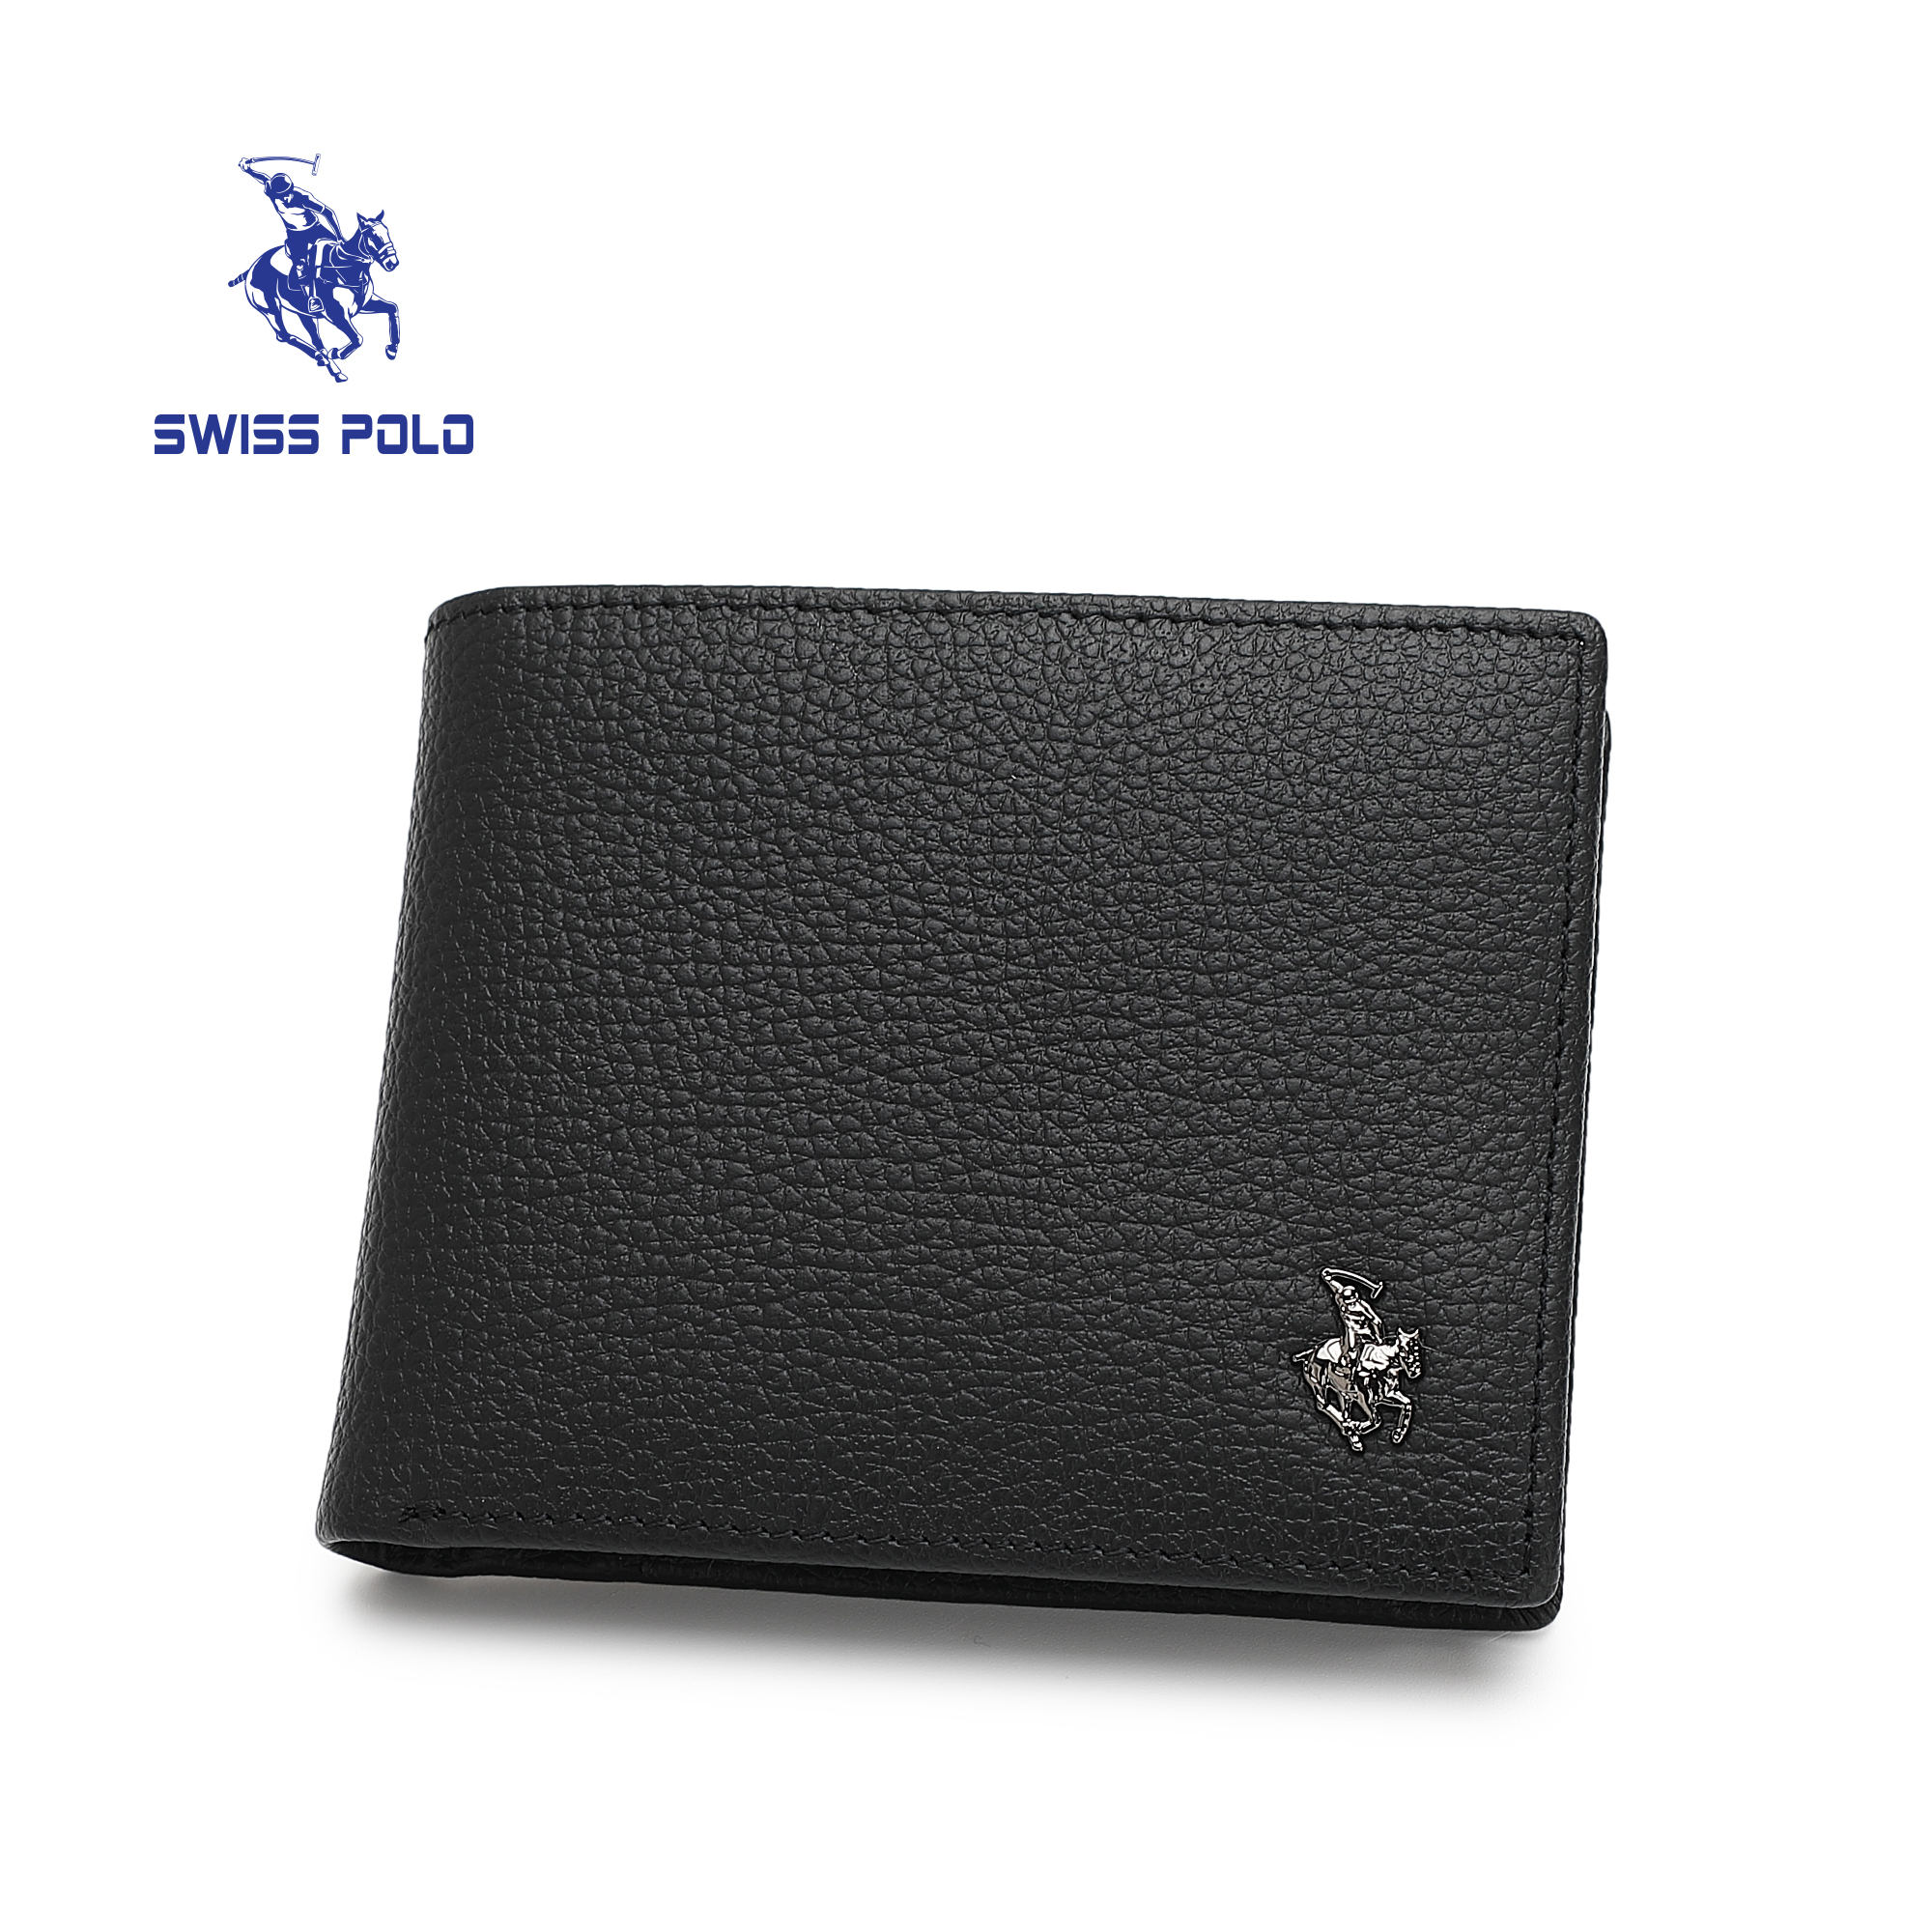 SWISS POLO Genuine Leather RFID Short Wallet SW 182-4 BLACK